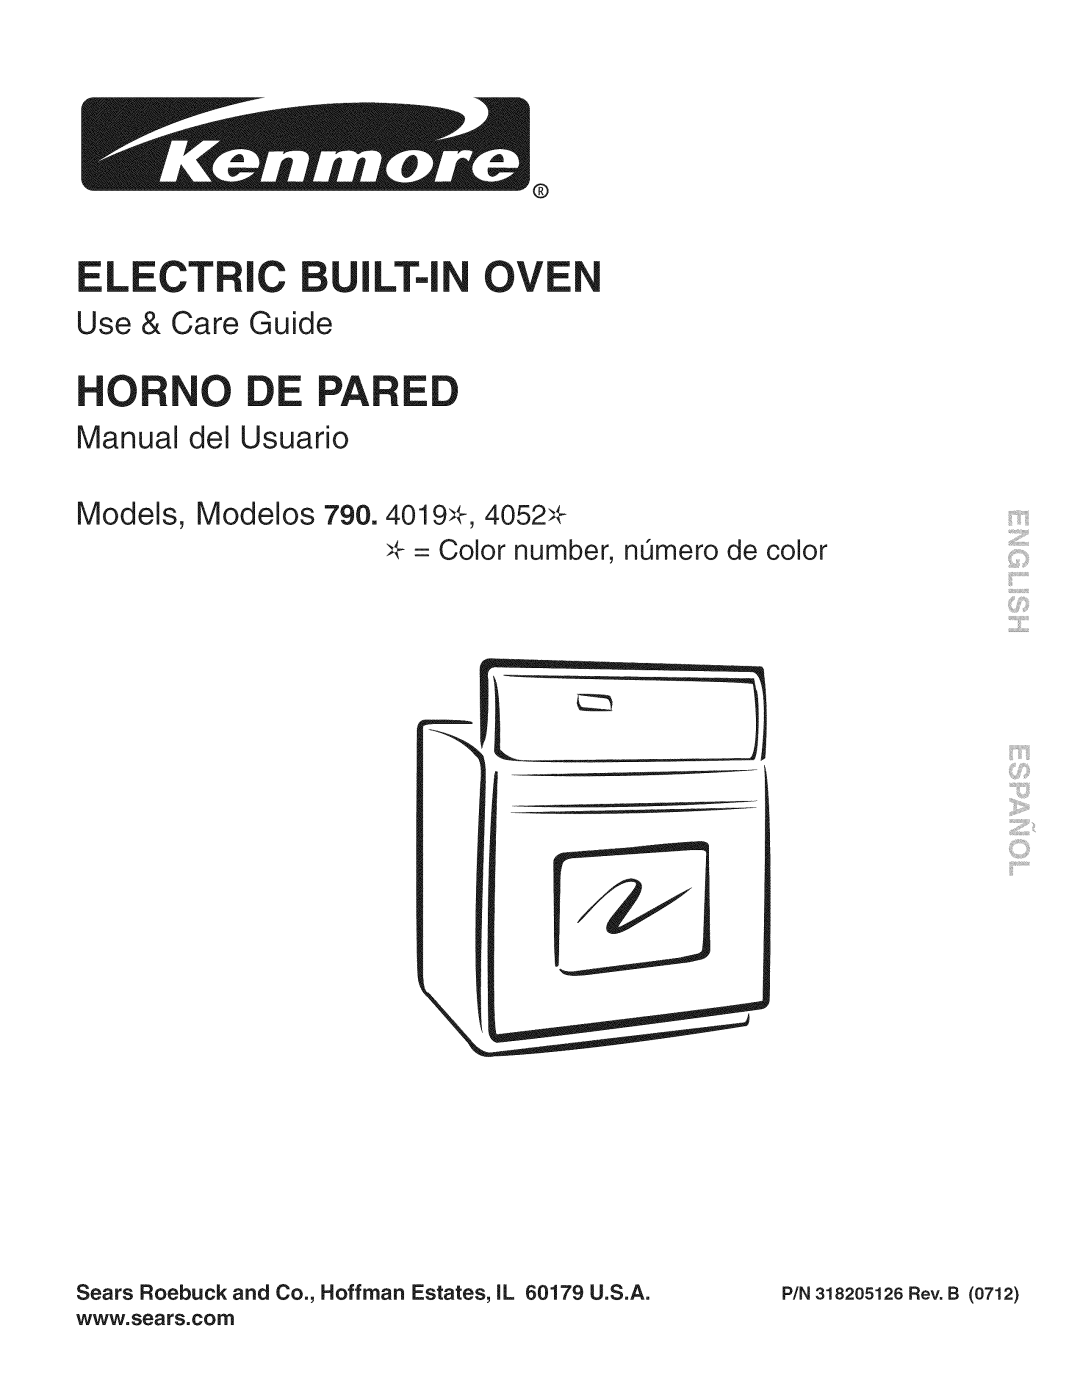 Kenmore 790.4019 manual Use & Care Guide, Manual del Usuario, Models, Modelos 790. 4019;_-,4052_, Elect C Ilt-Inov, i_iii 